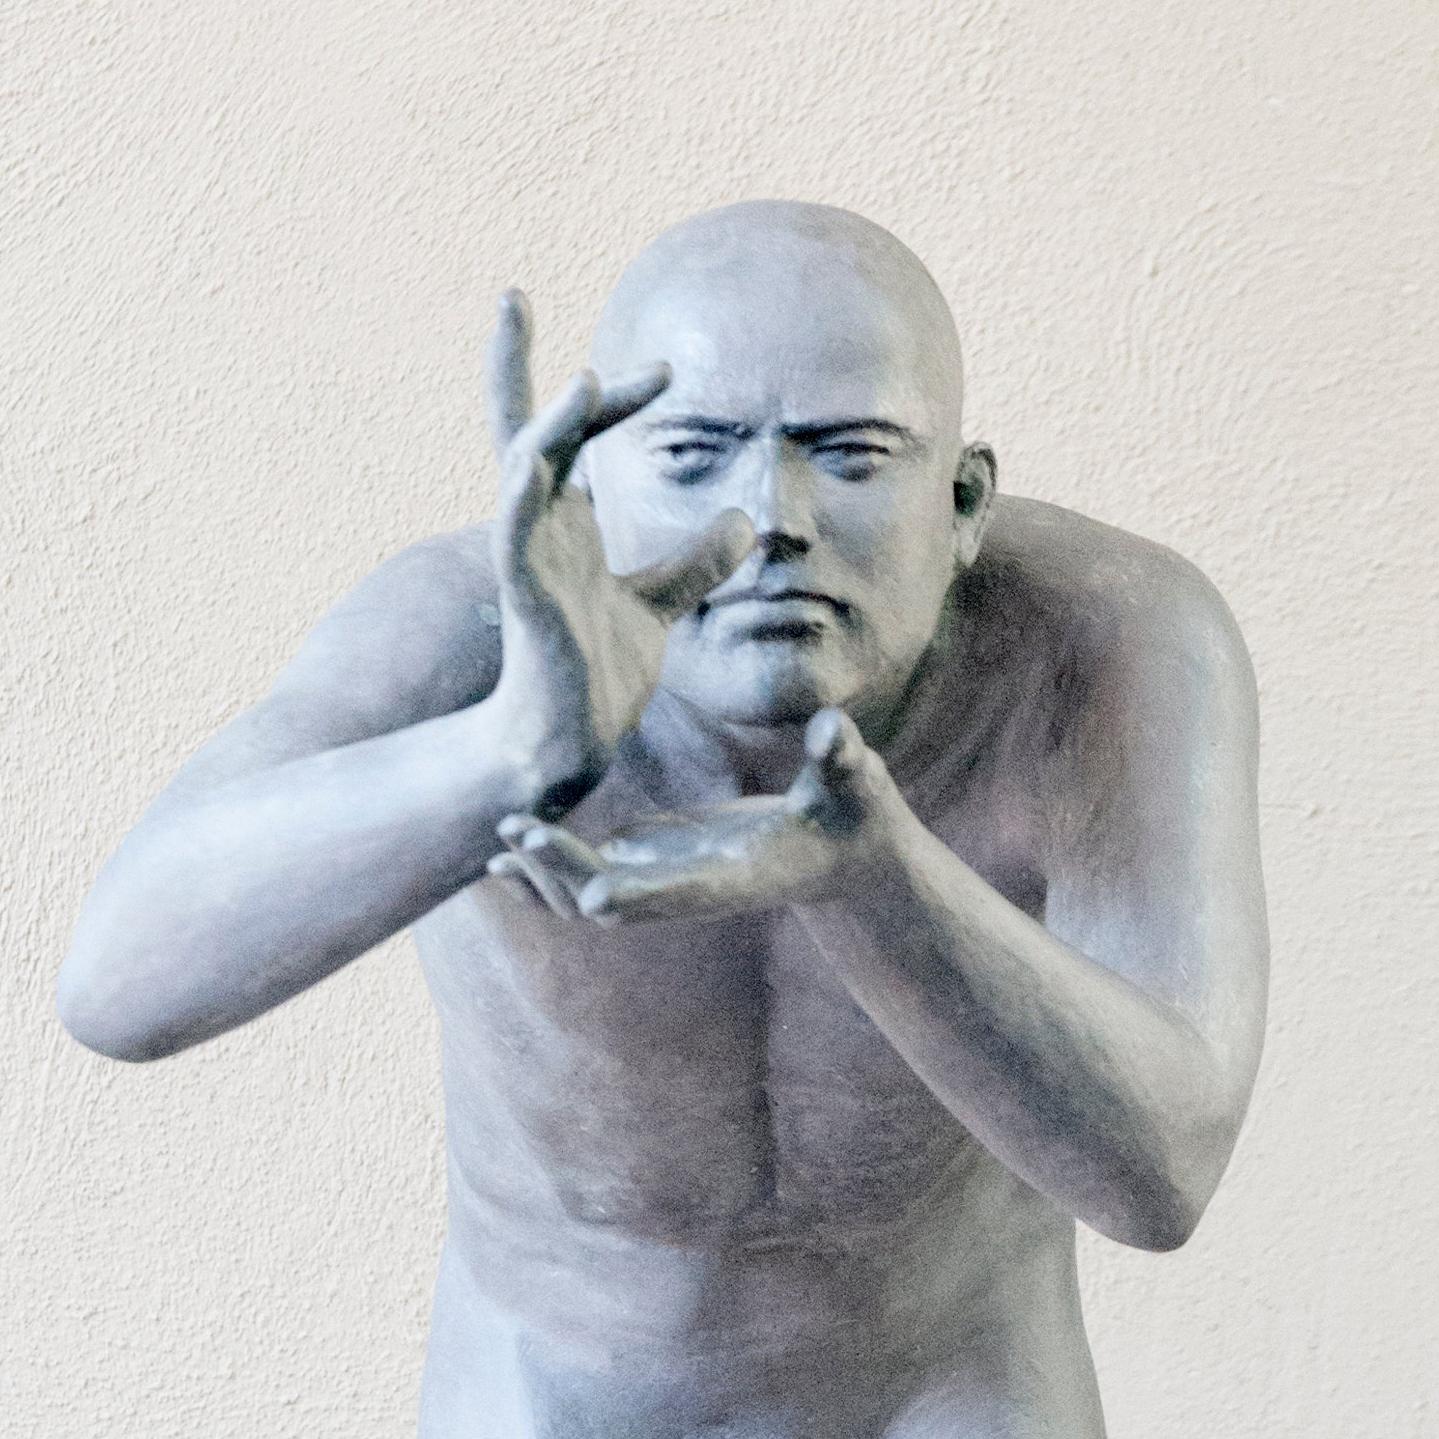 Fotografo II, bronze and stainless figurative sculpture - Sculpture by Aurora Canero